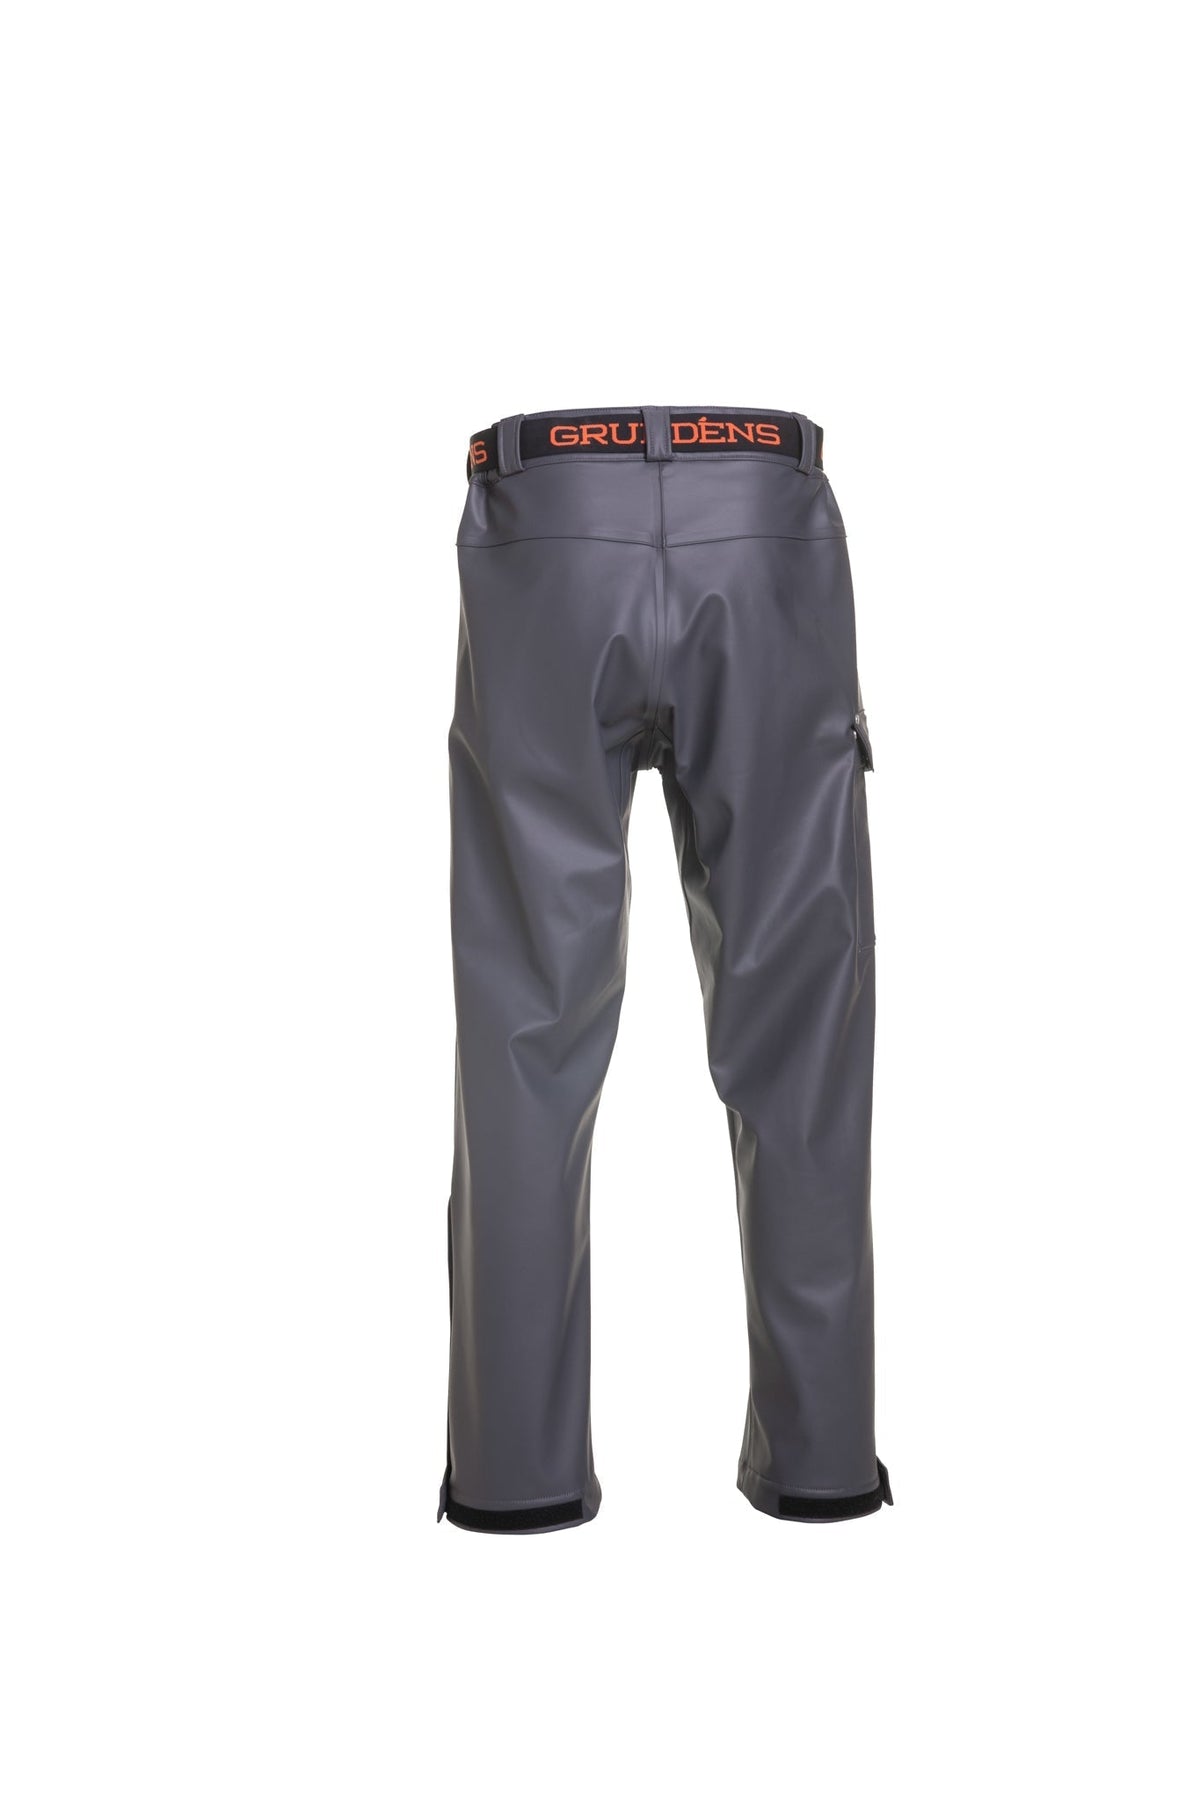 Grundéns Men&#39;s Neptune Waterproof Thermo Pant - Work World - Workwear, Work Boots, Safety Gear